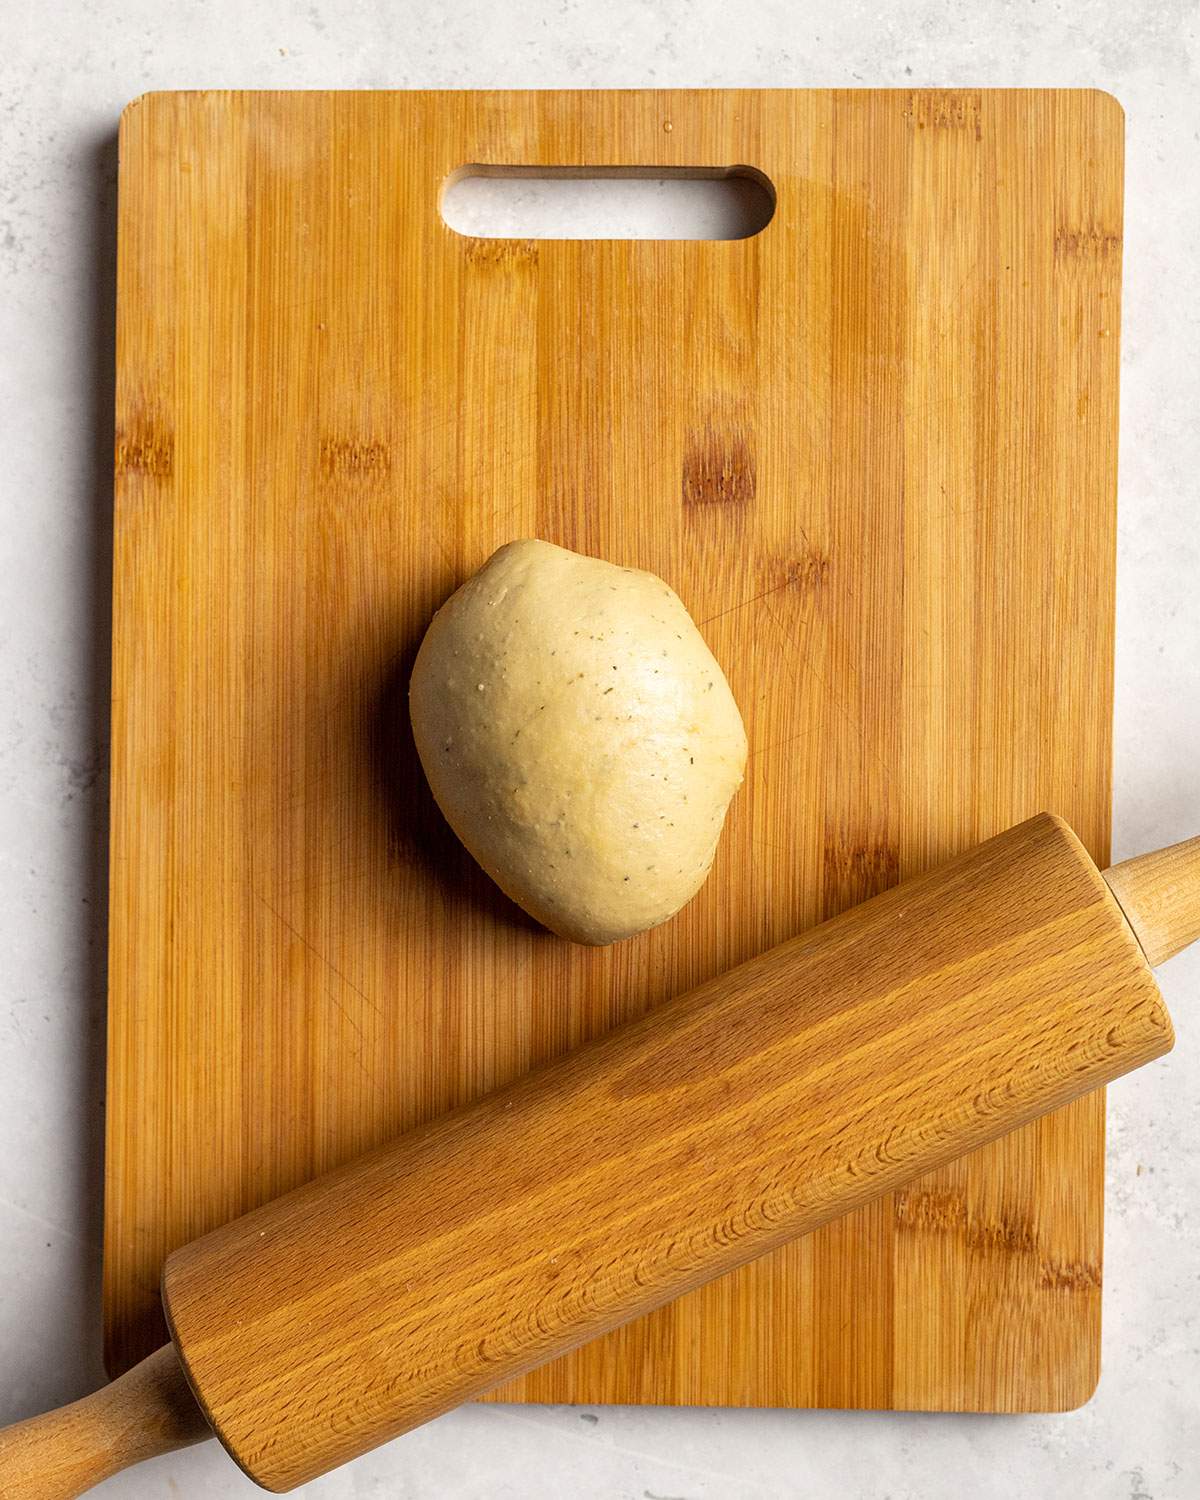 seitan dough ball with a rolling pin on a cutting board